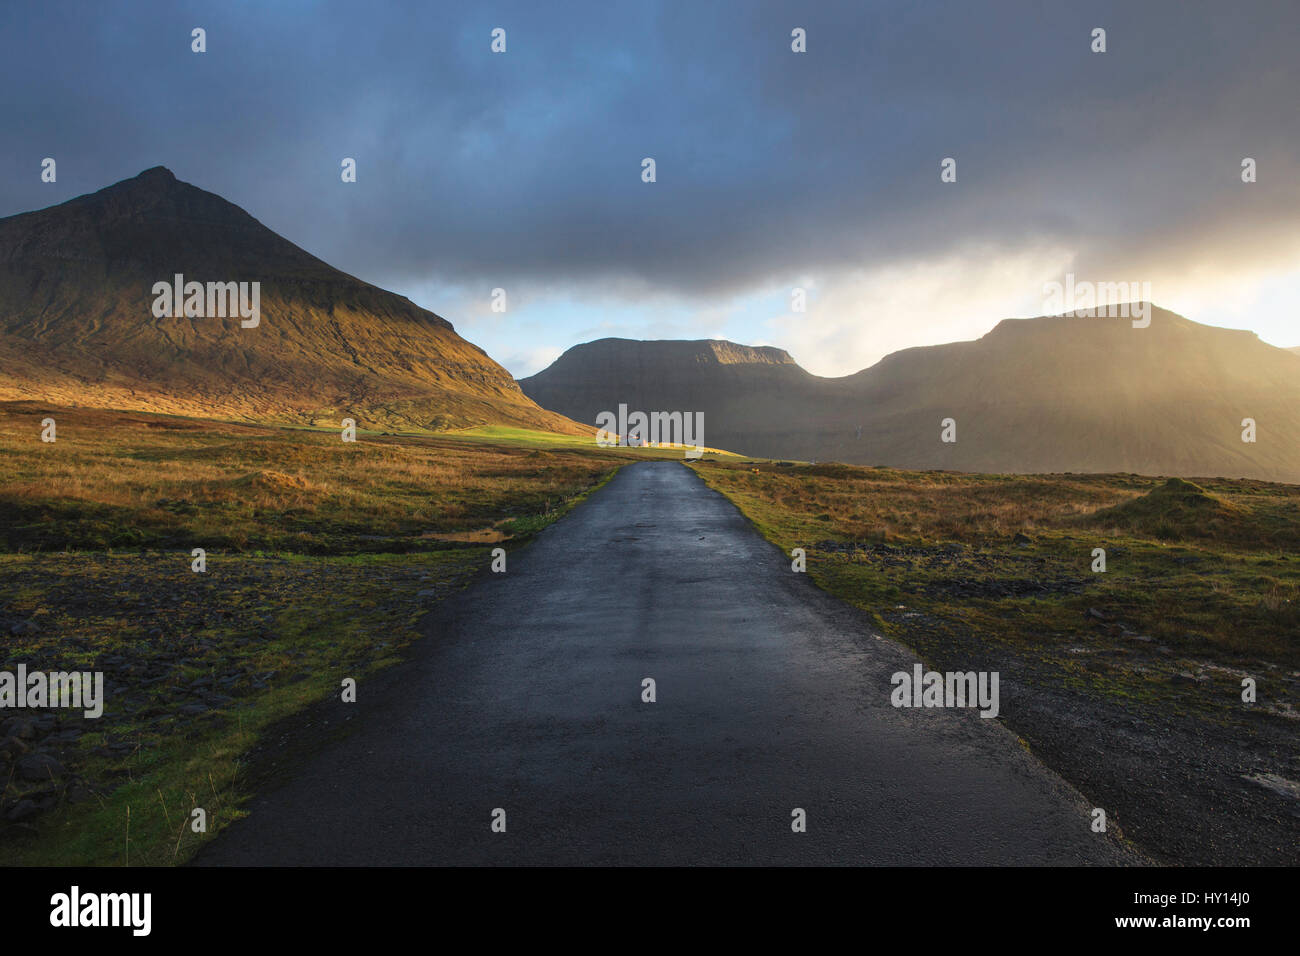 The beautiful mountainous landscape of the Faroe Islands. Stock Photo